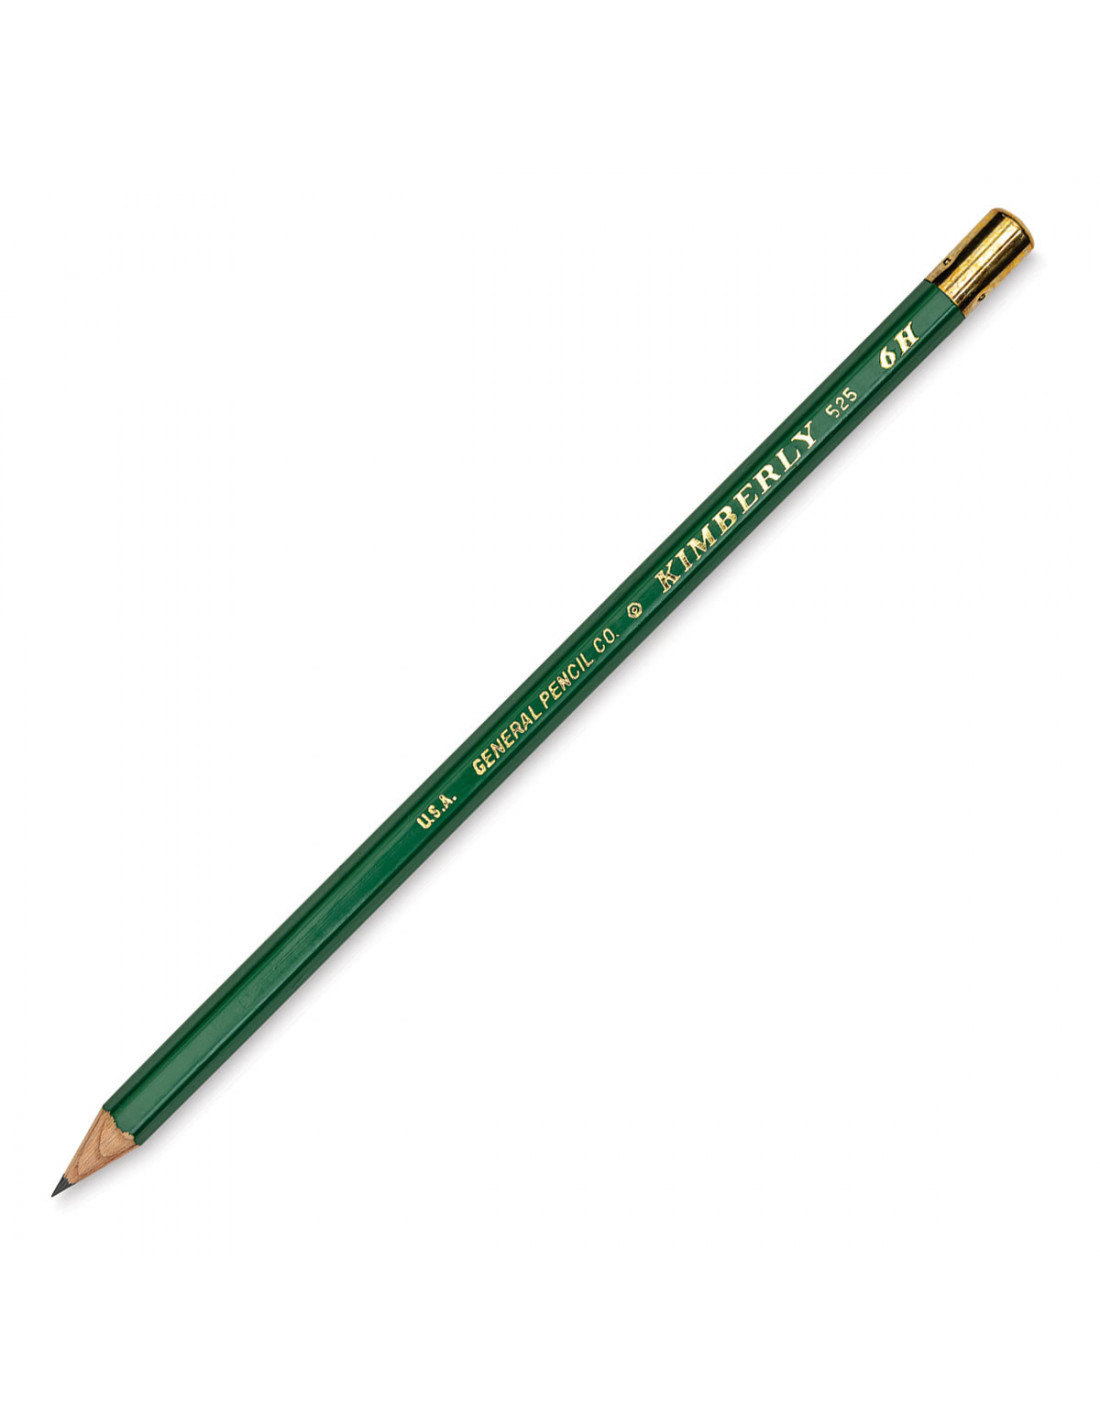 Crayon graphite 6H - Kimberly 525 - General Pencil Company